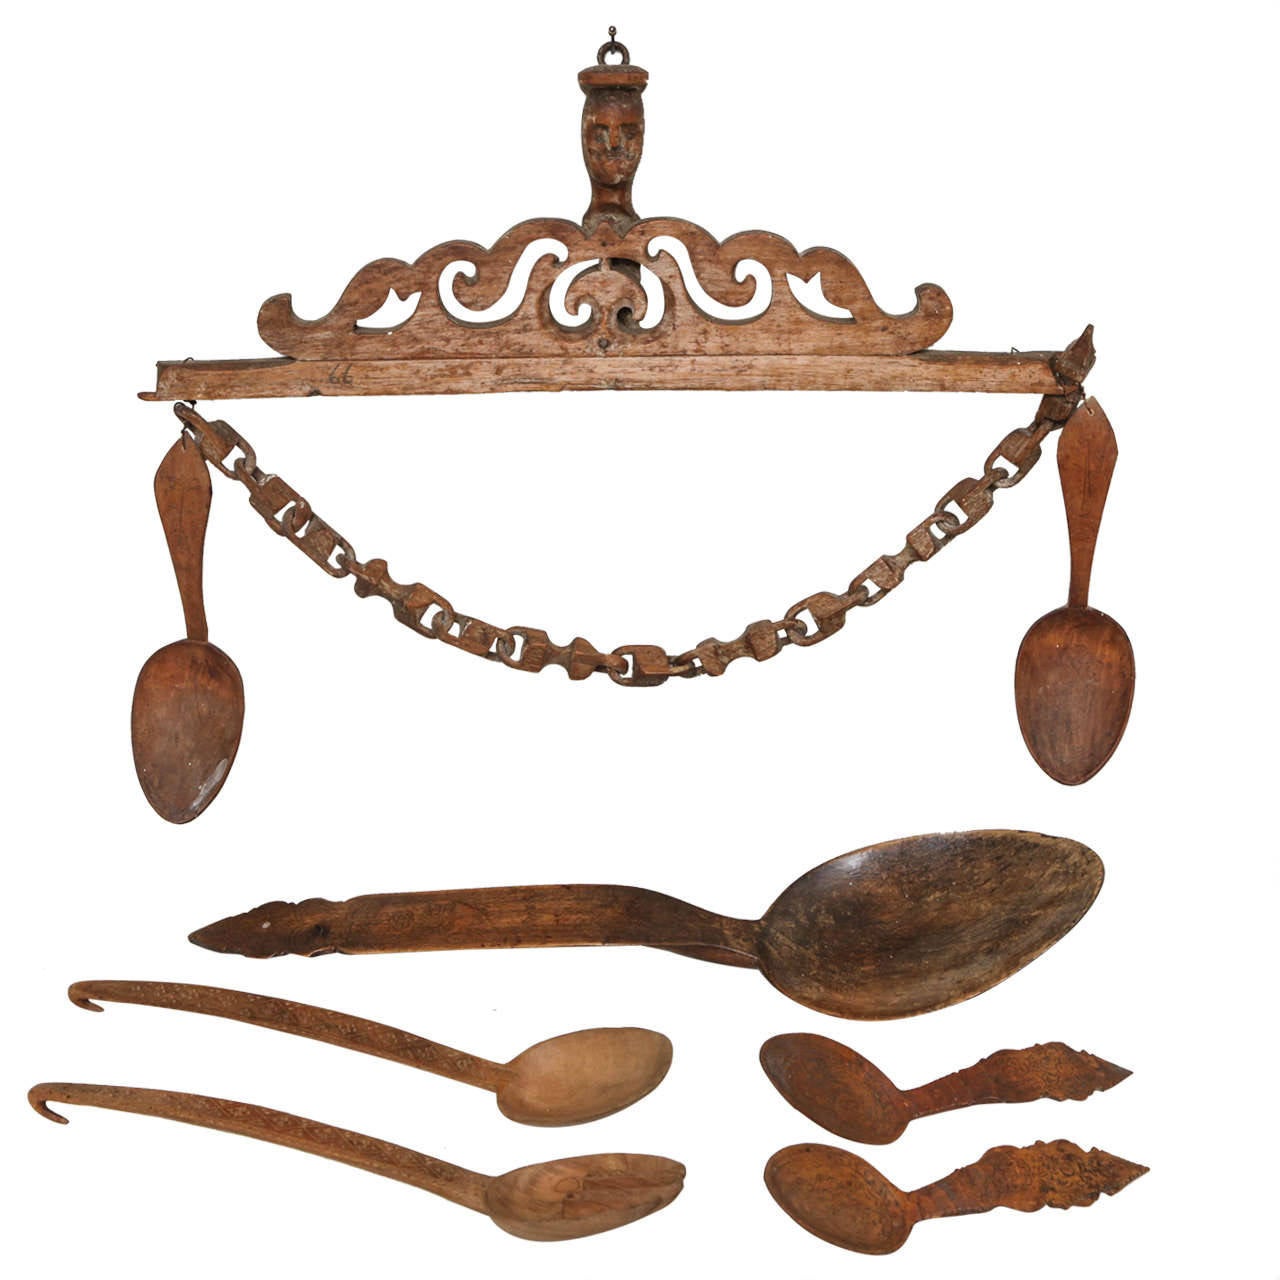 Norwegian Folk Art Spoon Rack and Spoon Collection